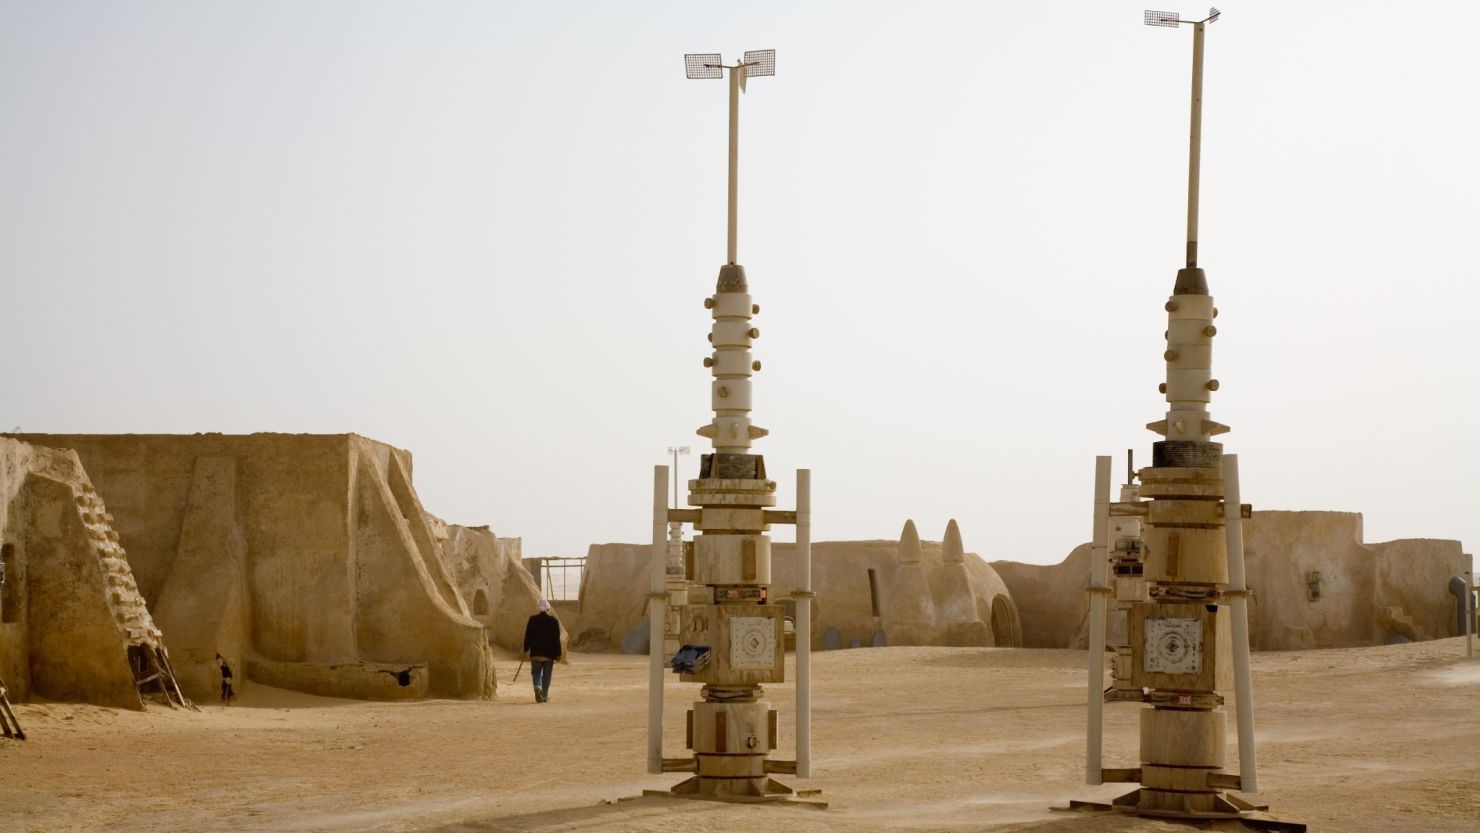 Moisture 'vaporators' on a Star Wars film set in the desert near Tozeur, Tunisia.